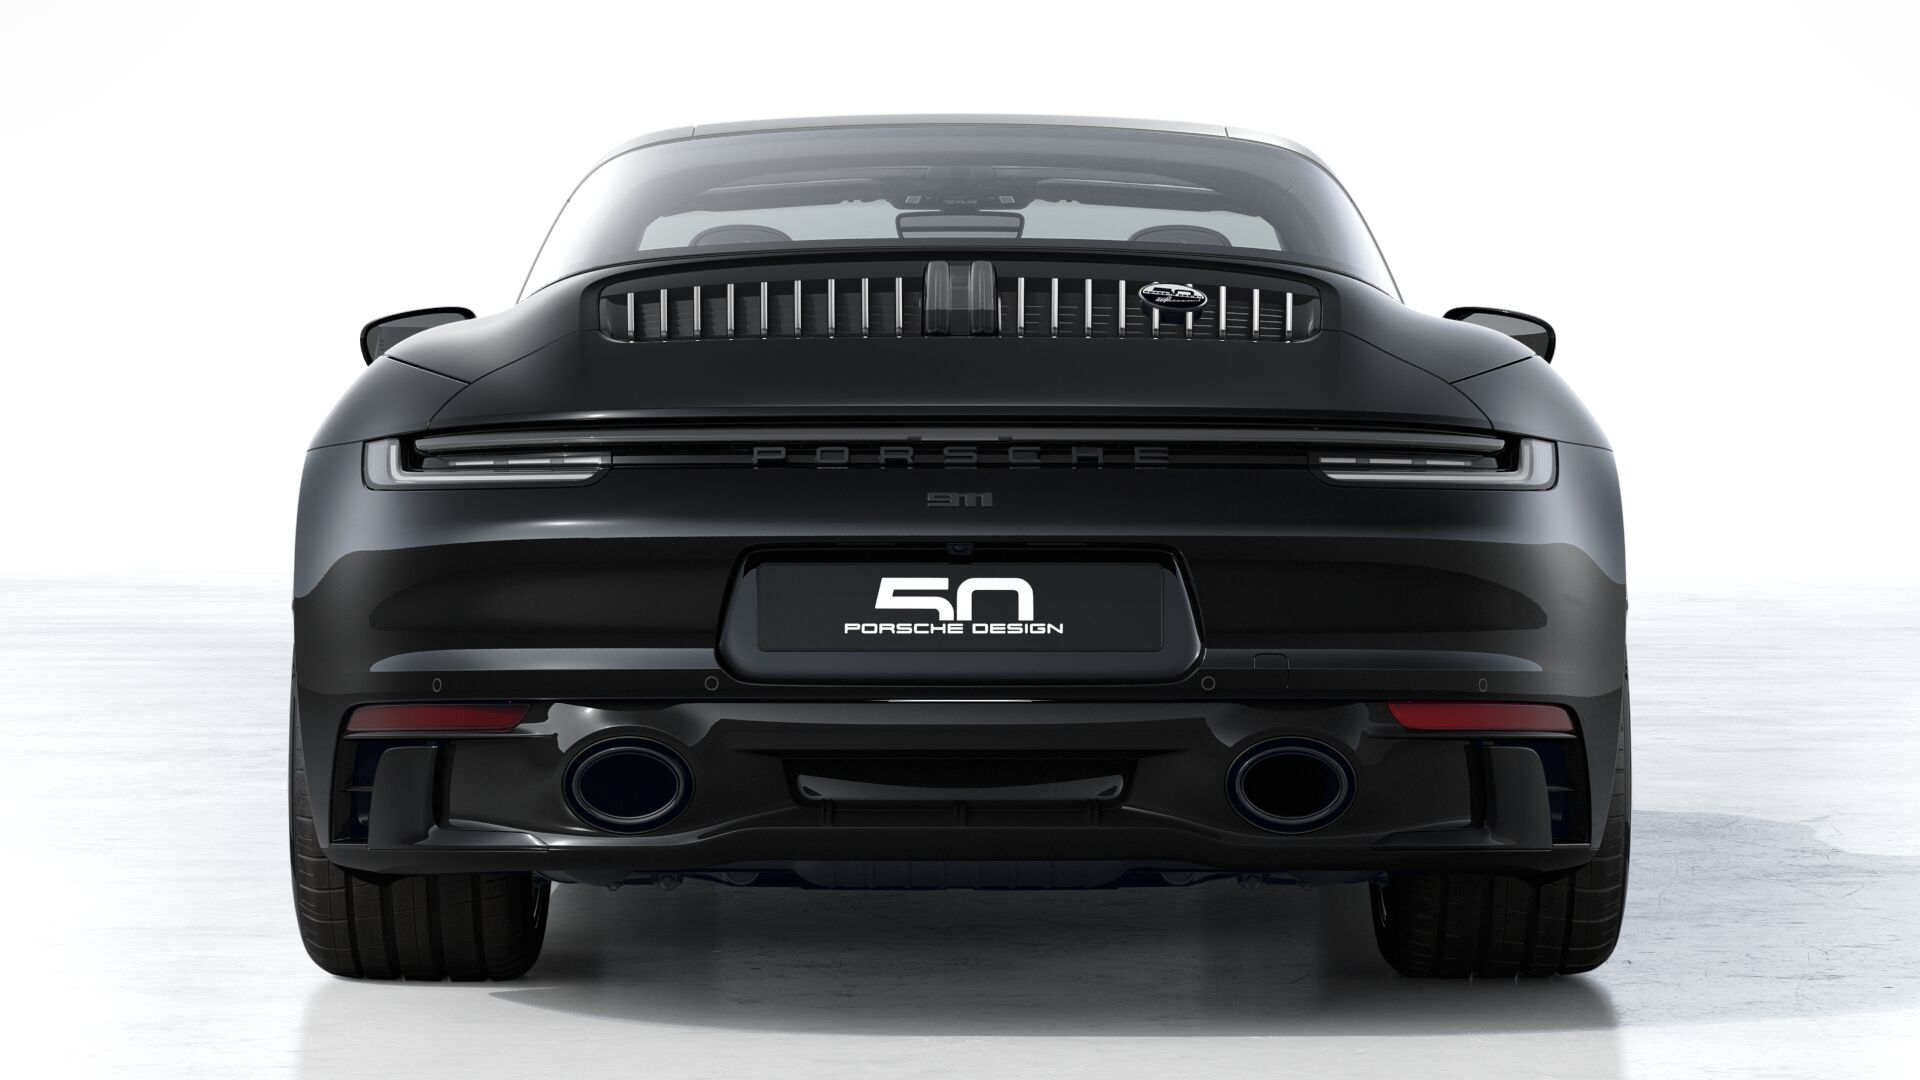 Exterior view of 911 Edition 50 Years Porsche Design